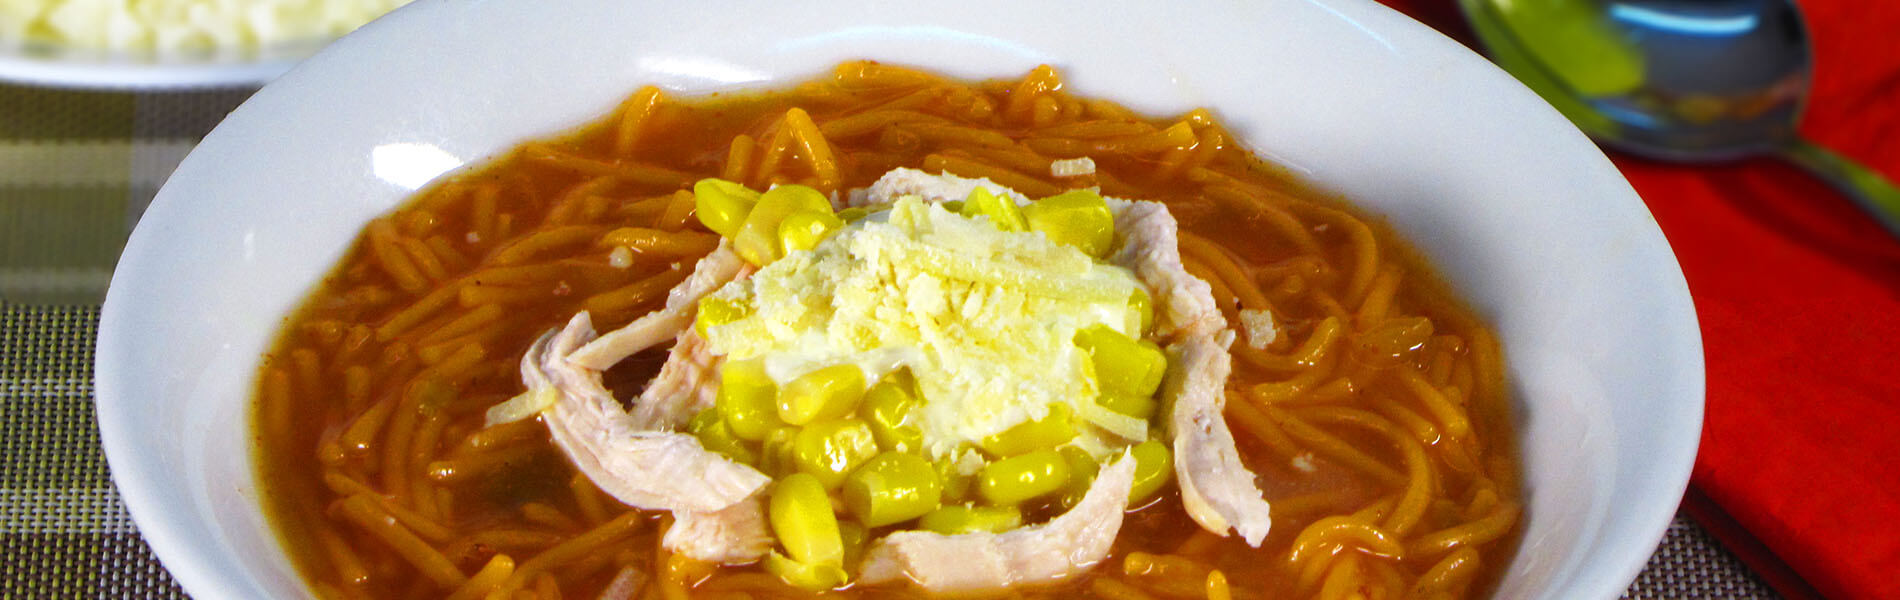 Sopa Mexicana de Fideos con sabor Ranchero Doria